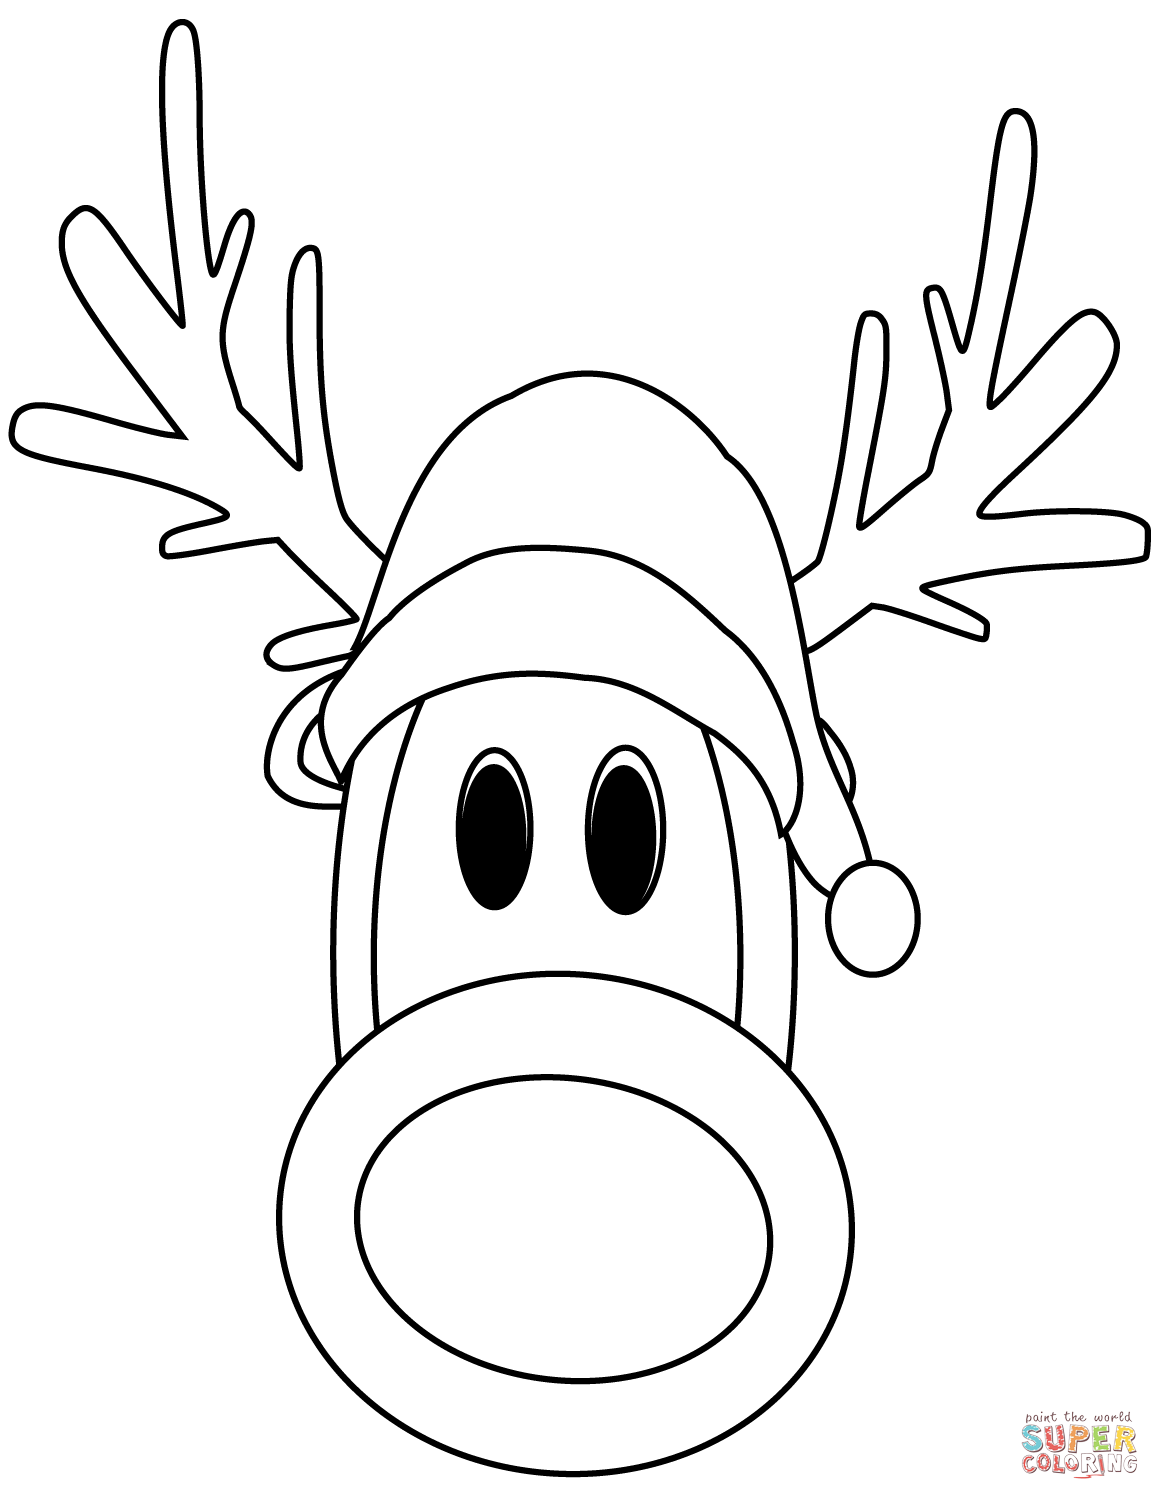 Reindeer head coloring page free printable coloring pages